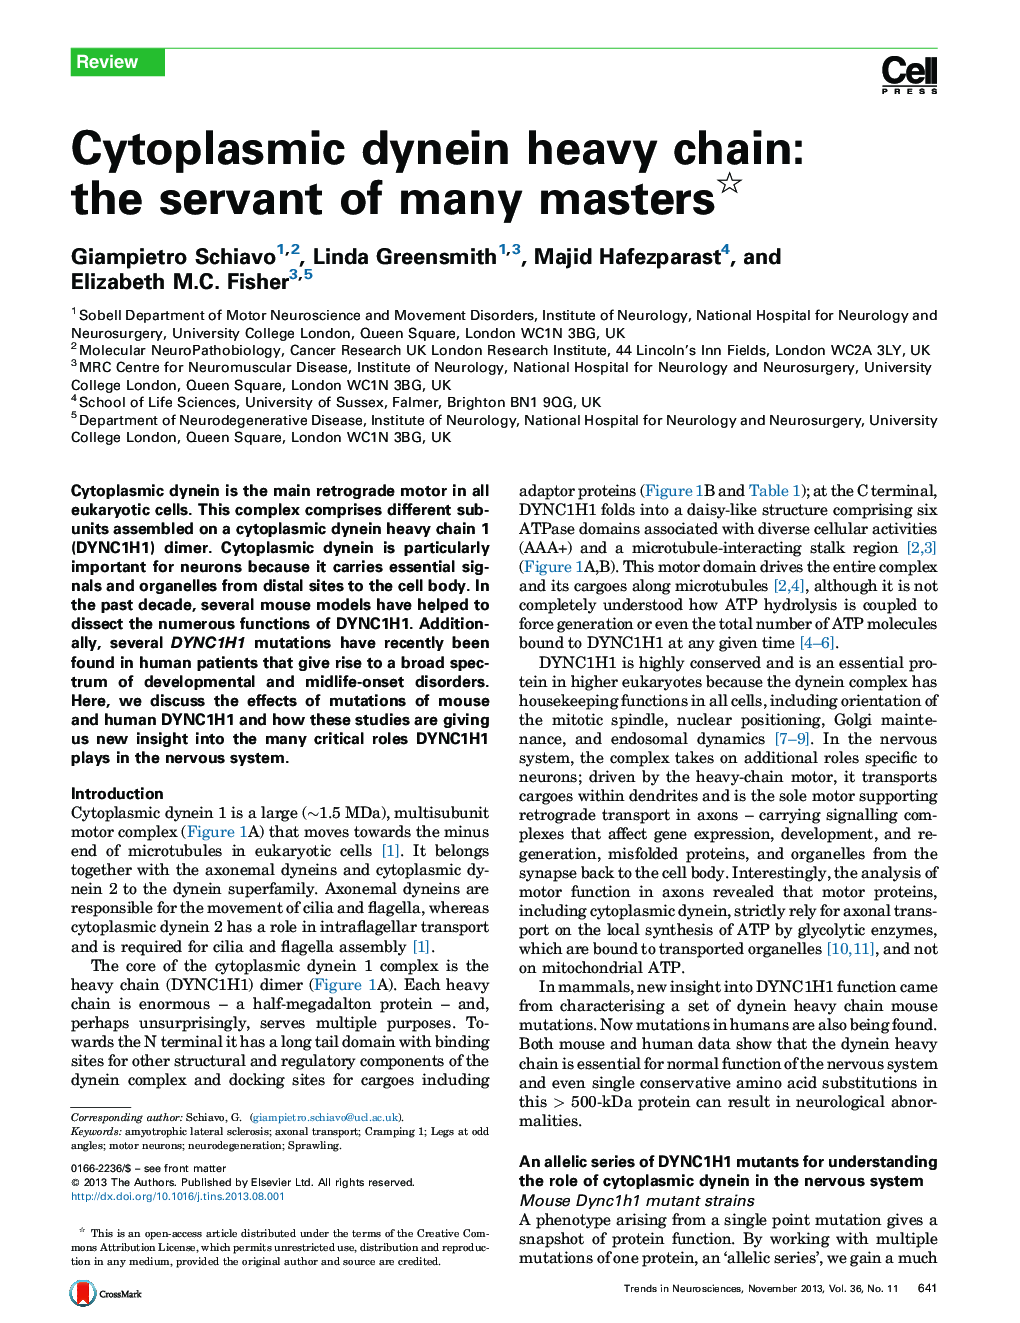 Cytoplasmic dynein heavy chain: the servant of many masters